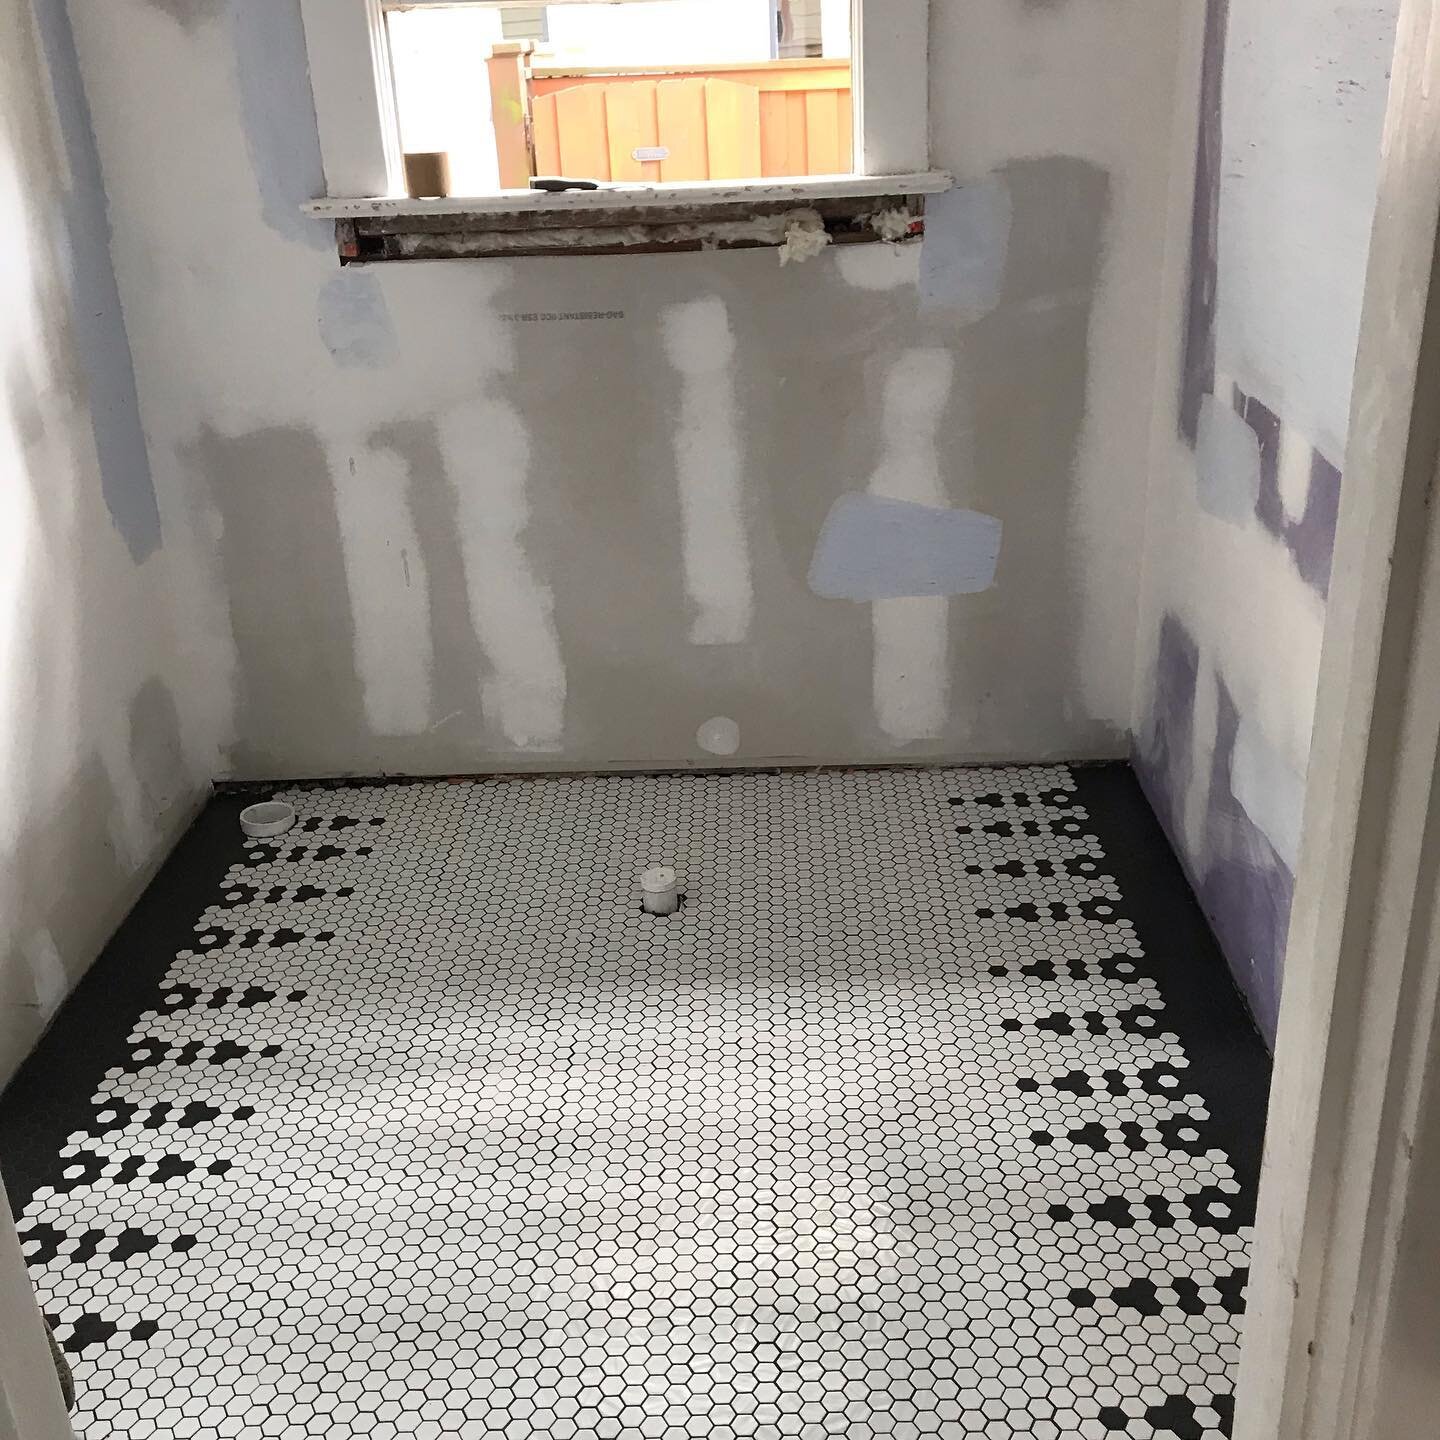 New floor bathroom 
Call us (904) 613-7911.  www.RRSPECFLOORING.com  #bathrooms #kitchen #tile #pontevedra #pontevedrabeach #florida #jacksonville  #jax #jaguars #atlanticbeach #sawgrass #worldgolfvillage #queensharbor